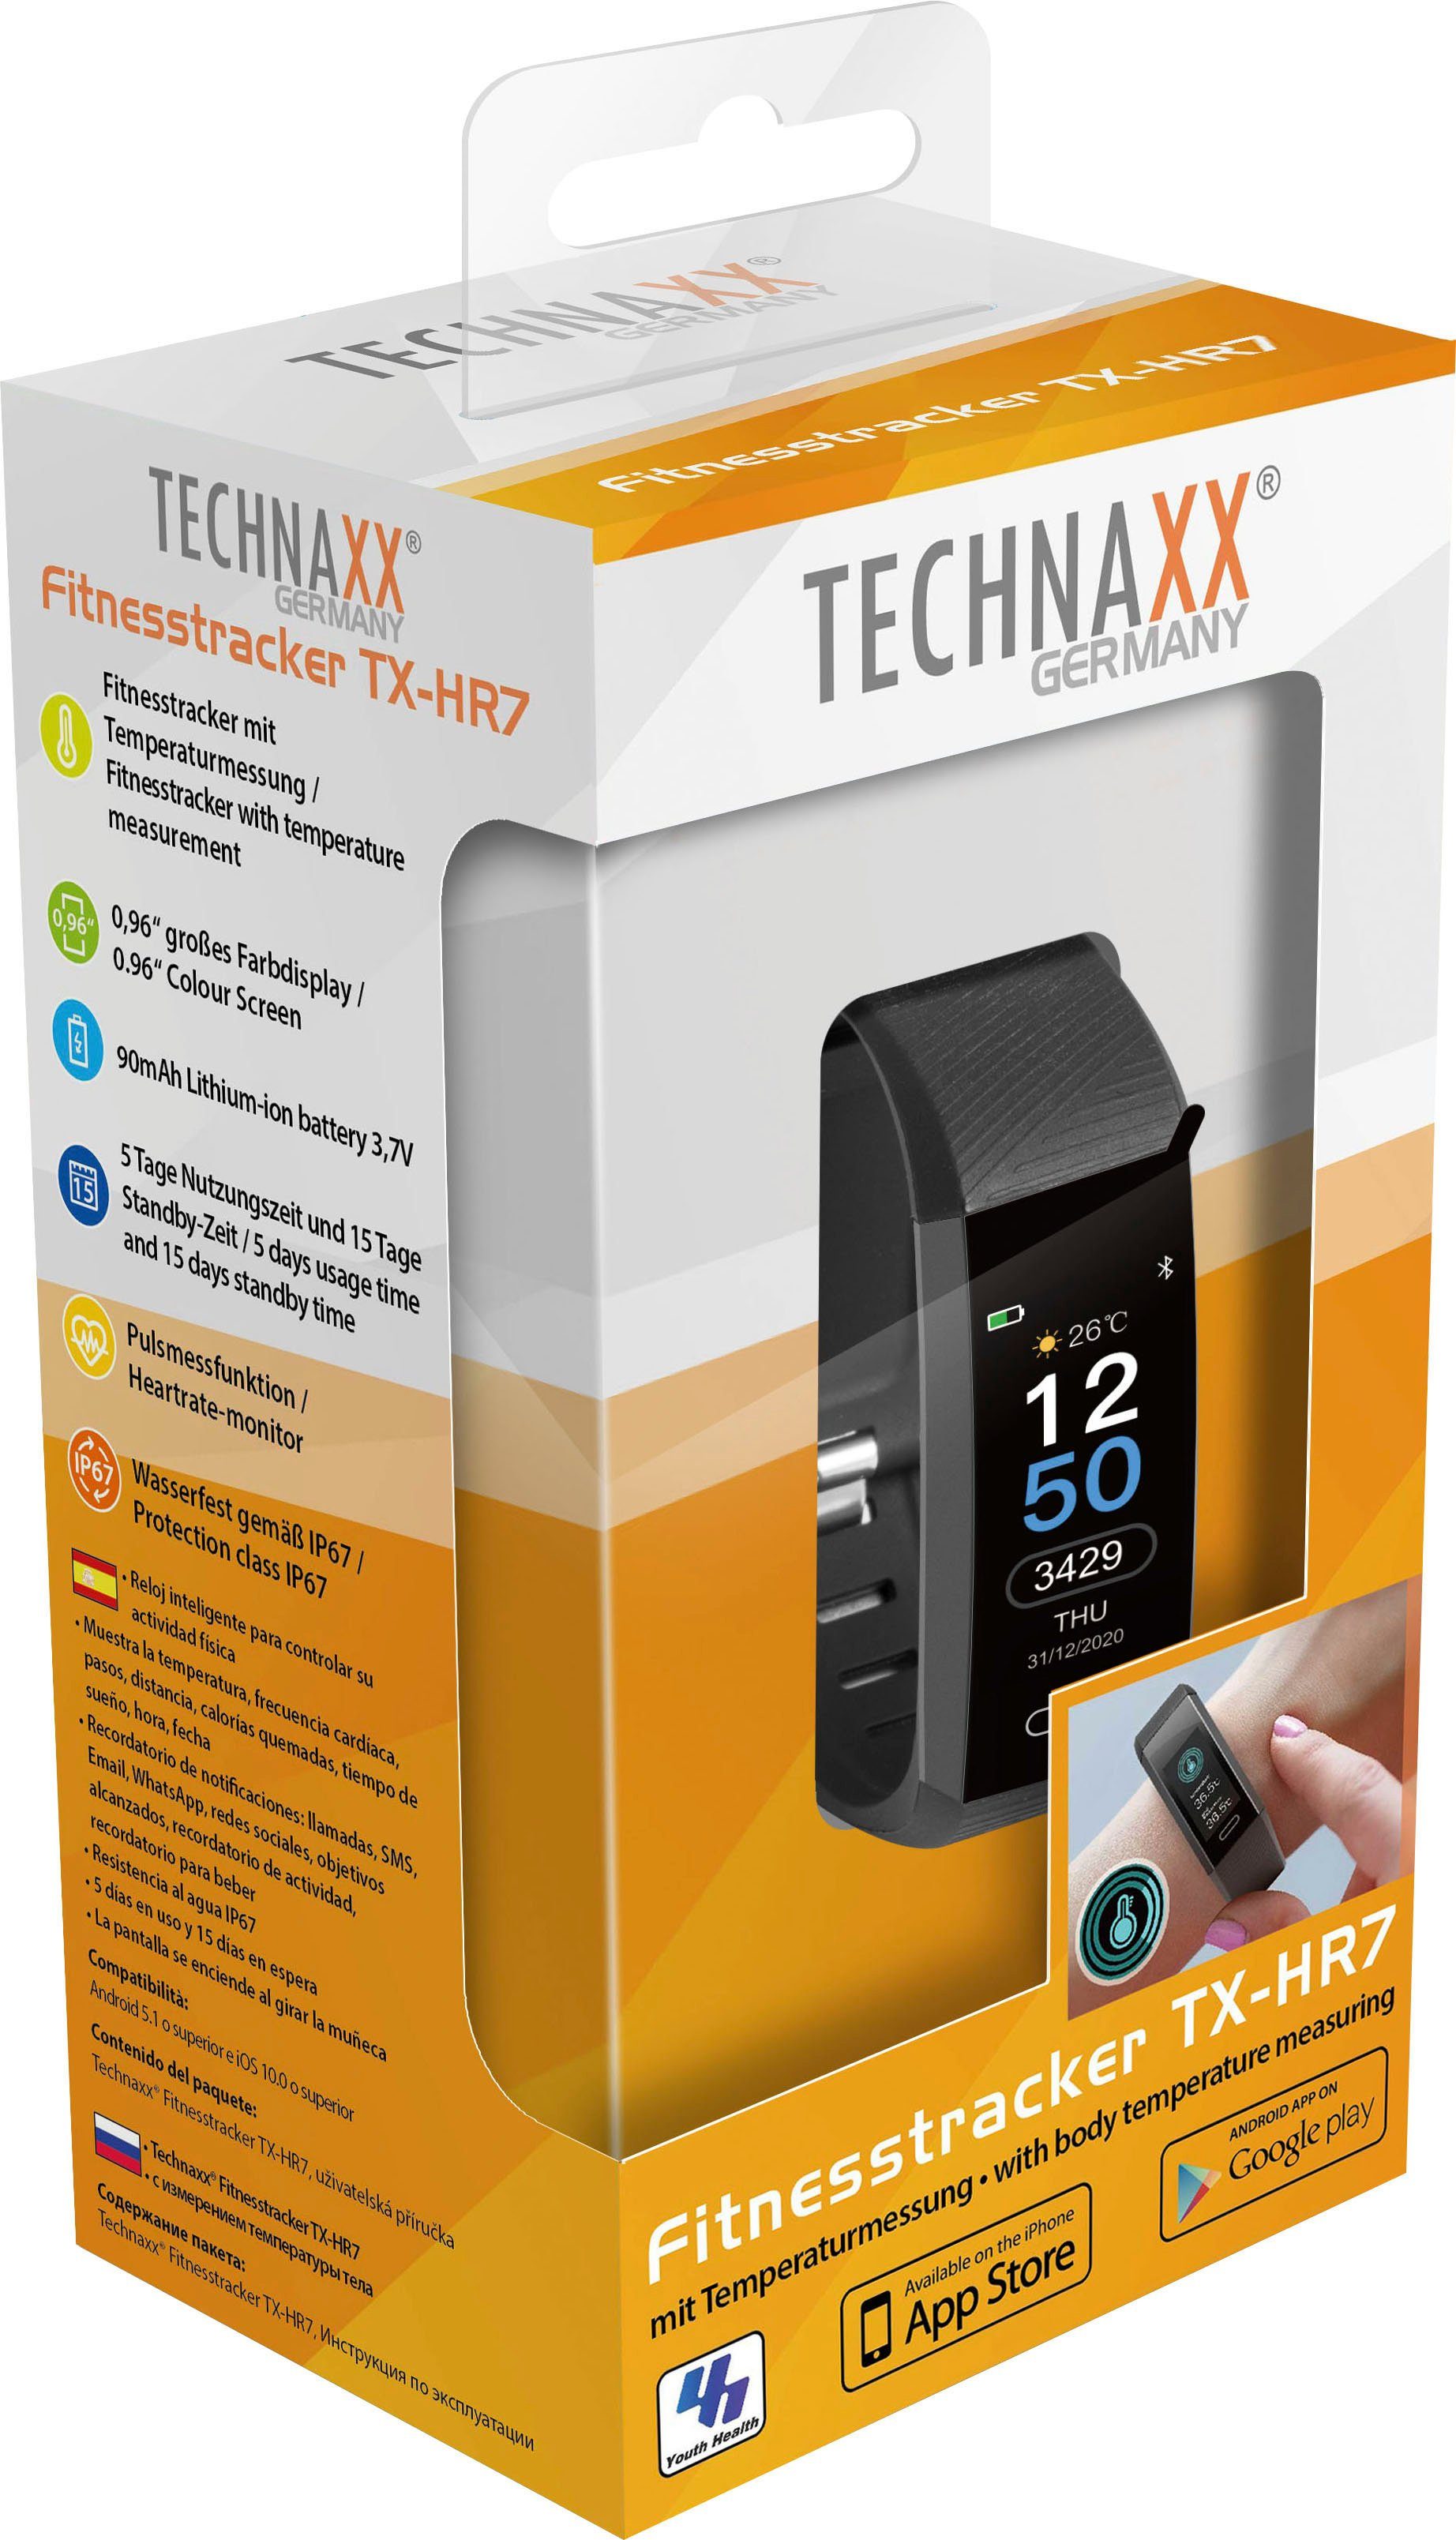 Technaxx TX-HR7 Activity Tracker